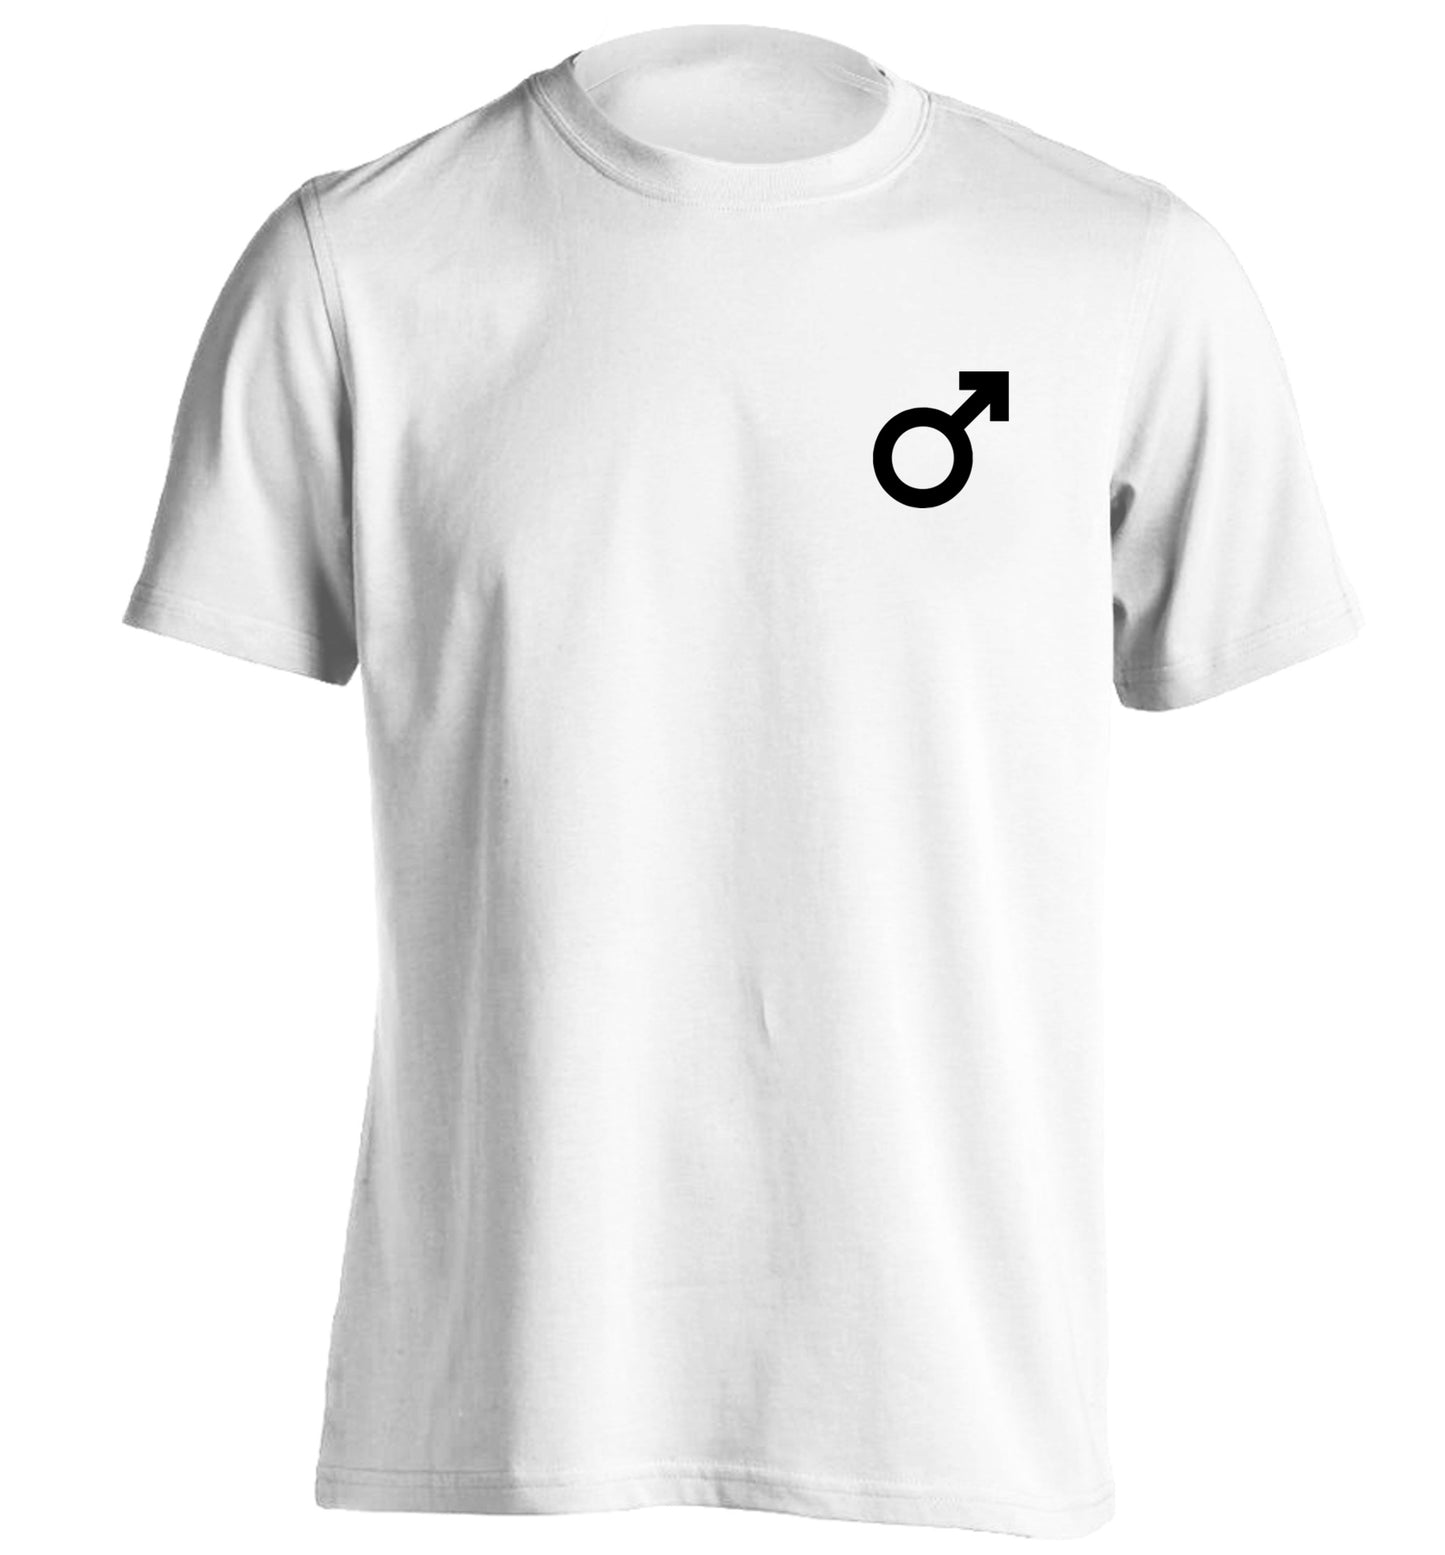 Male symbol pocket adults unisex white Tshirt 2XL